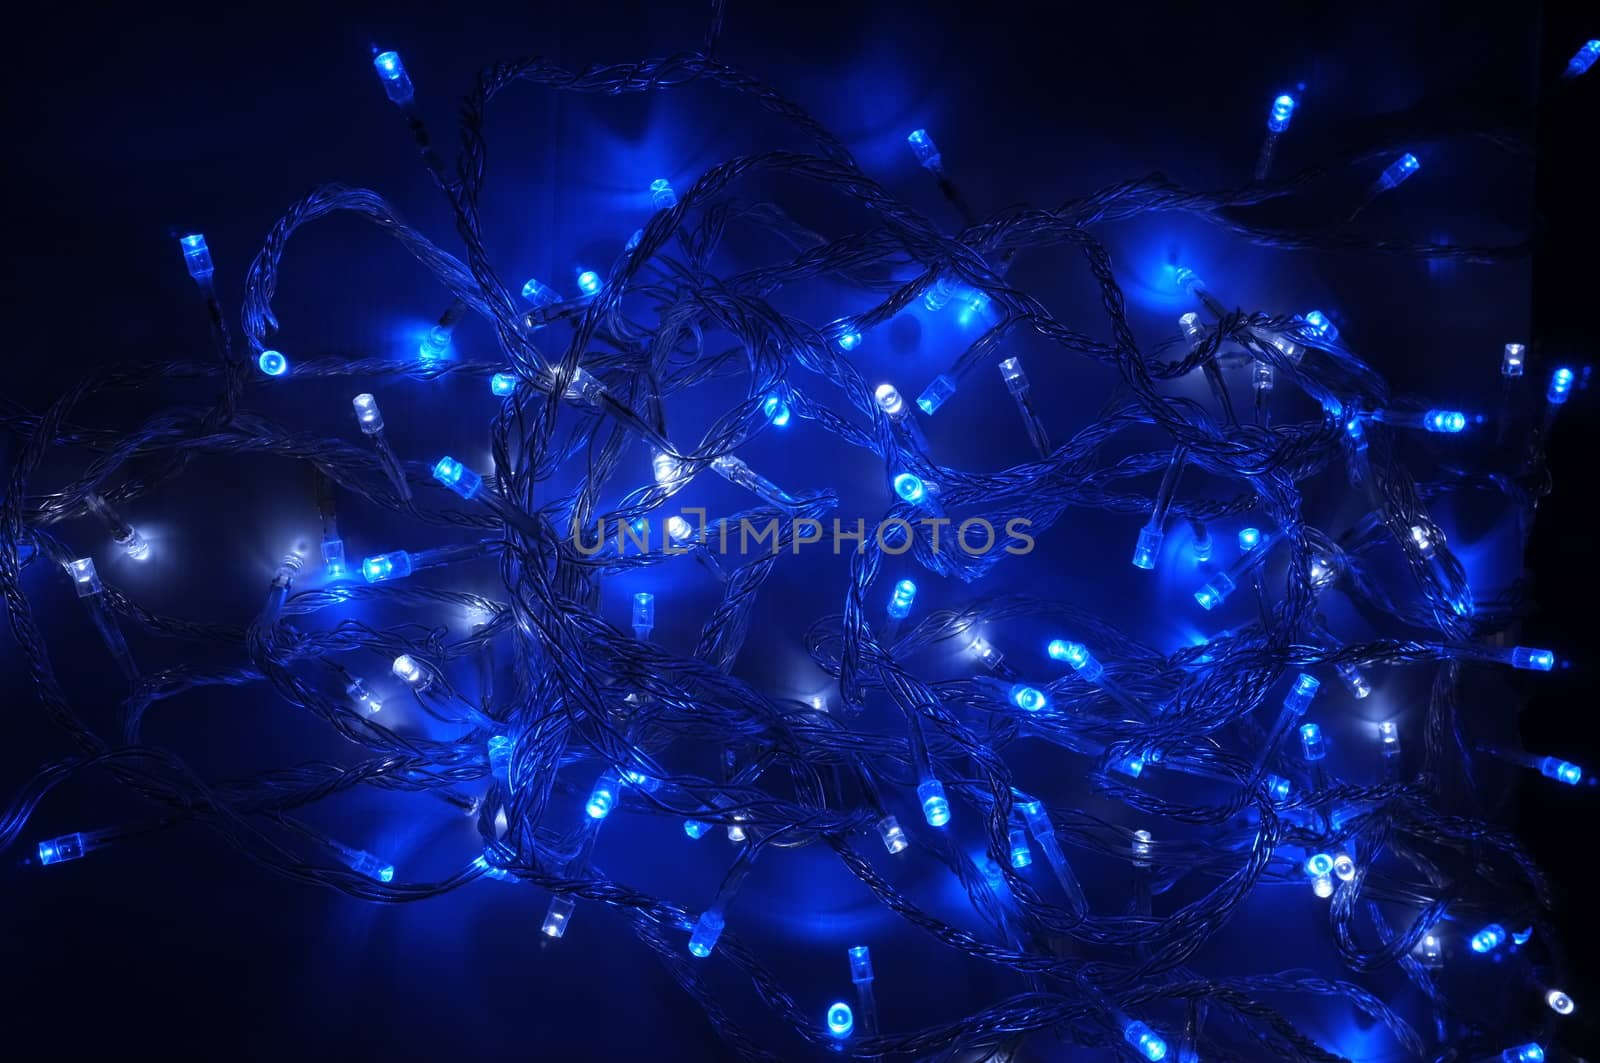 Blue lighting background, blue decorative garland by Hepjam